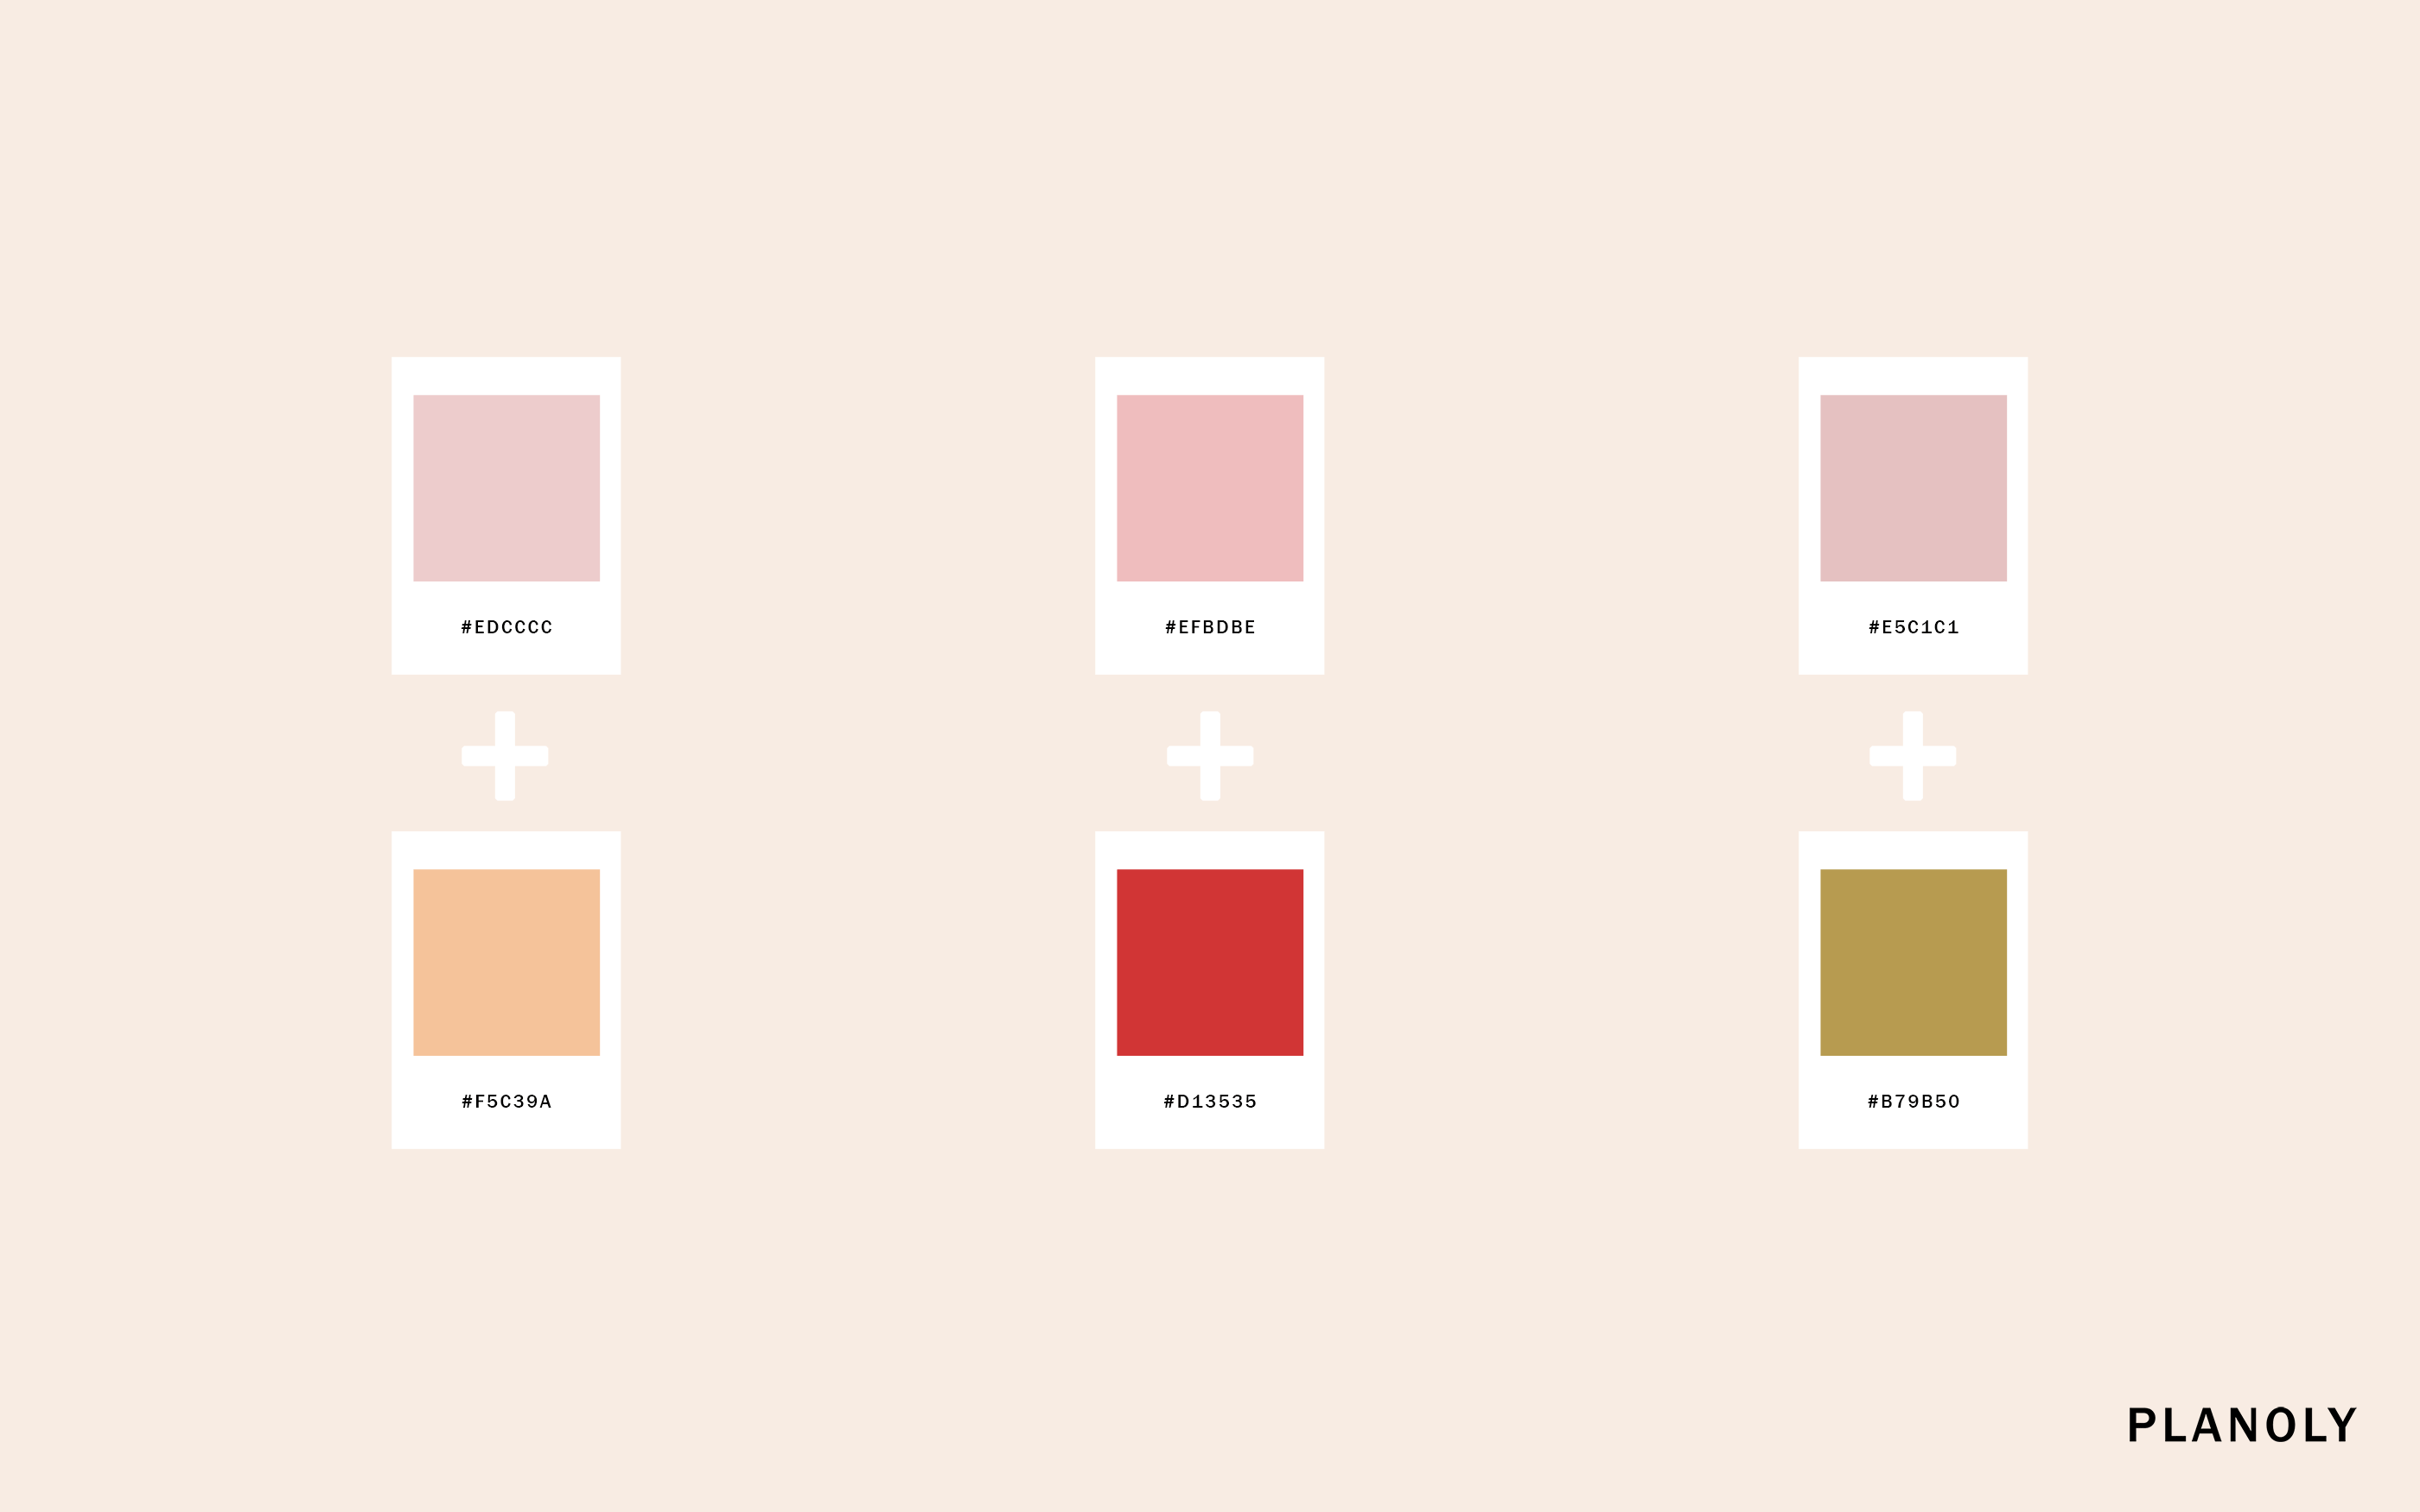 Color Psychology: The Color Pink